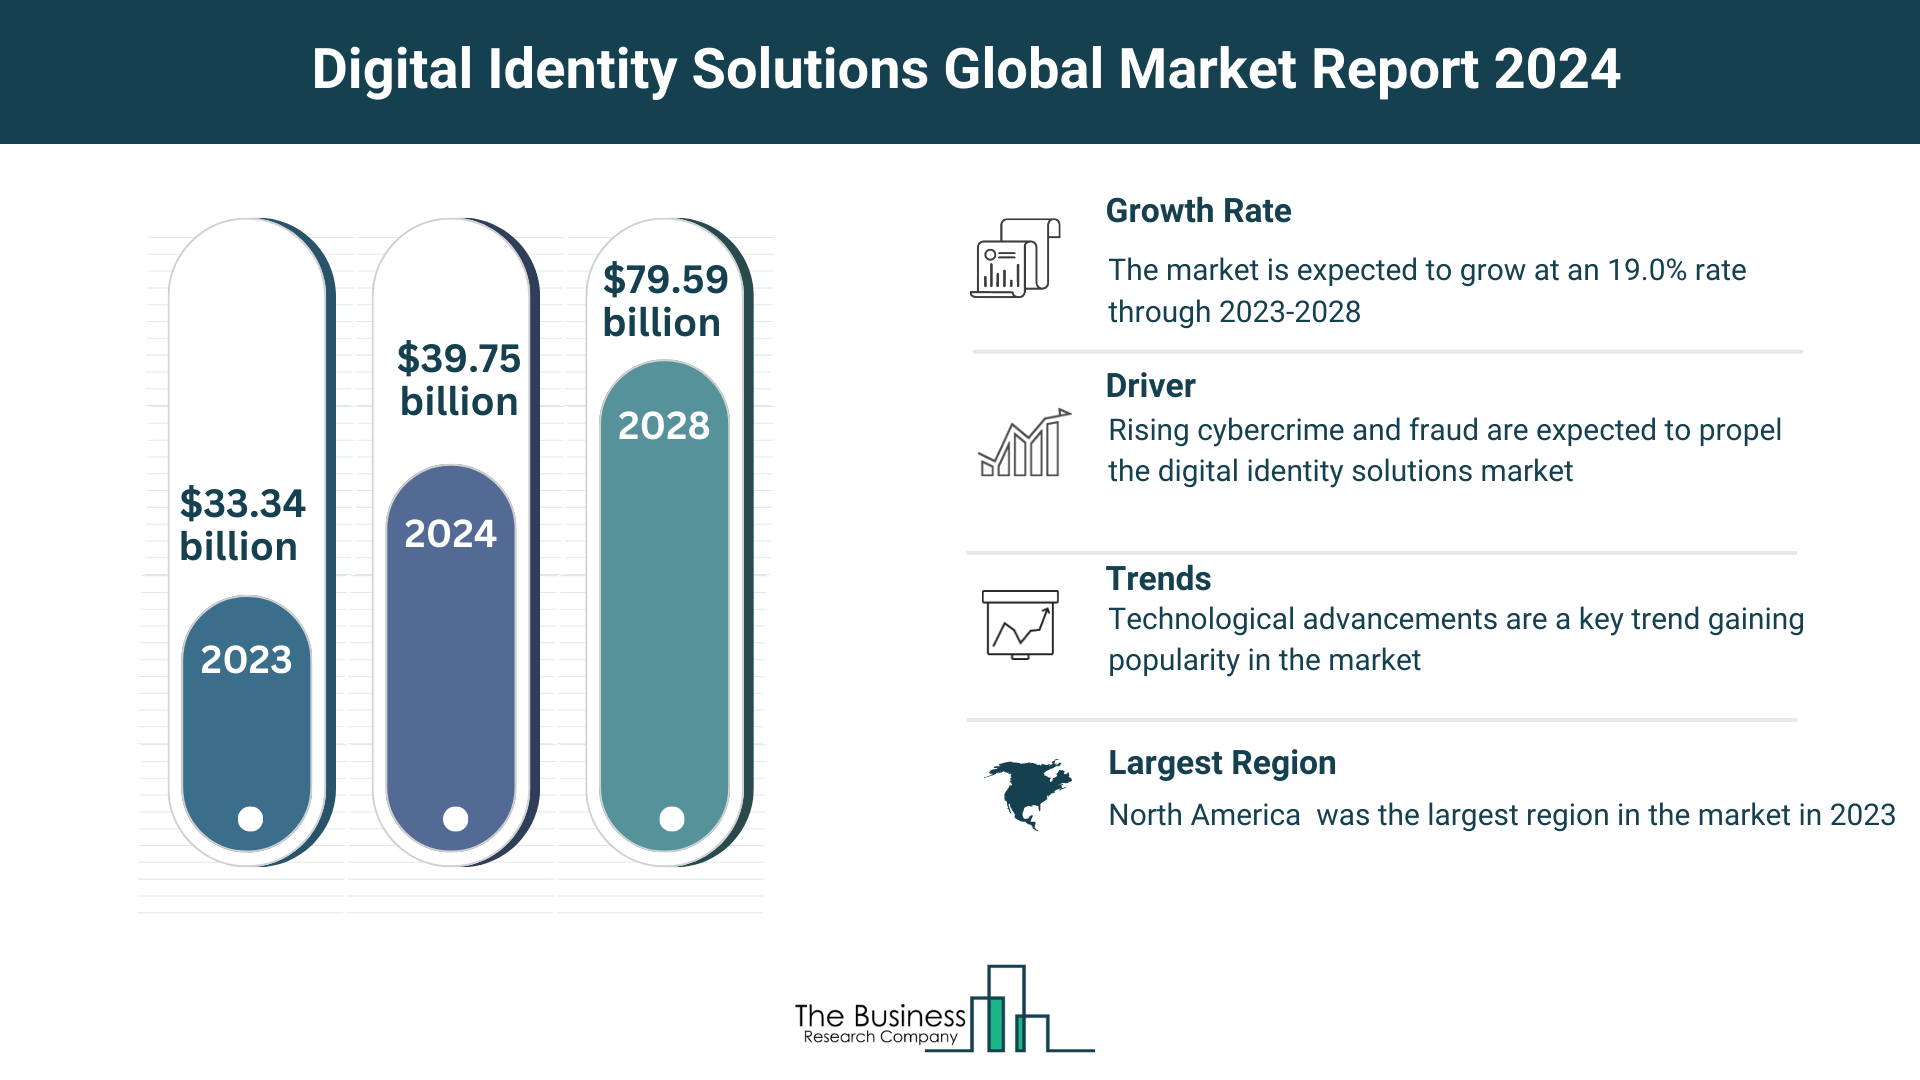 Global Digital Identity Solutions Market